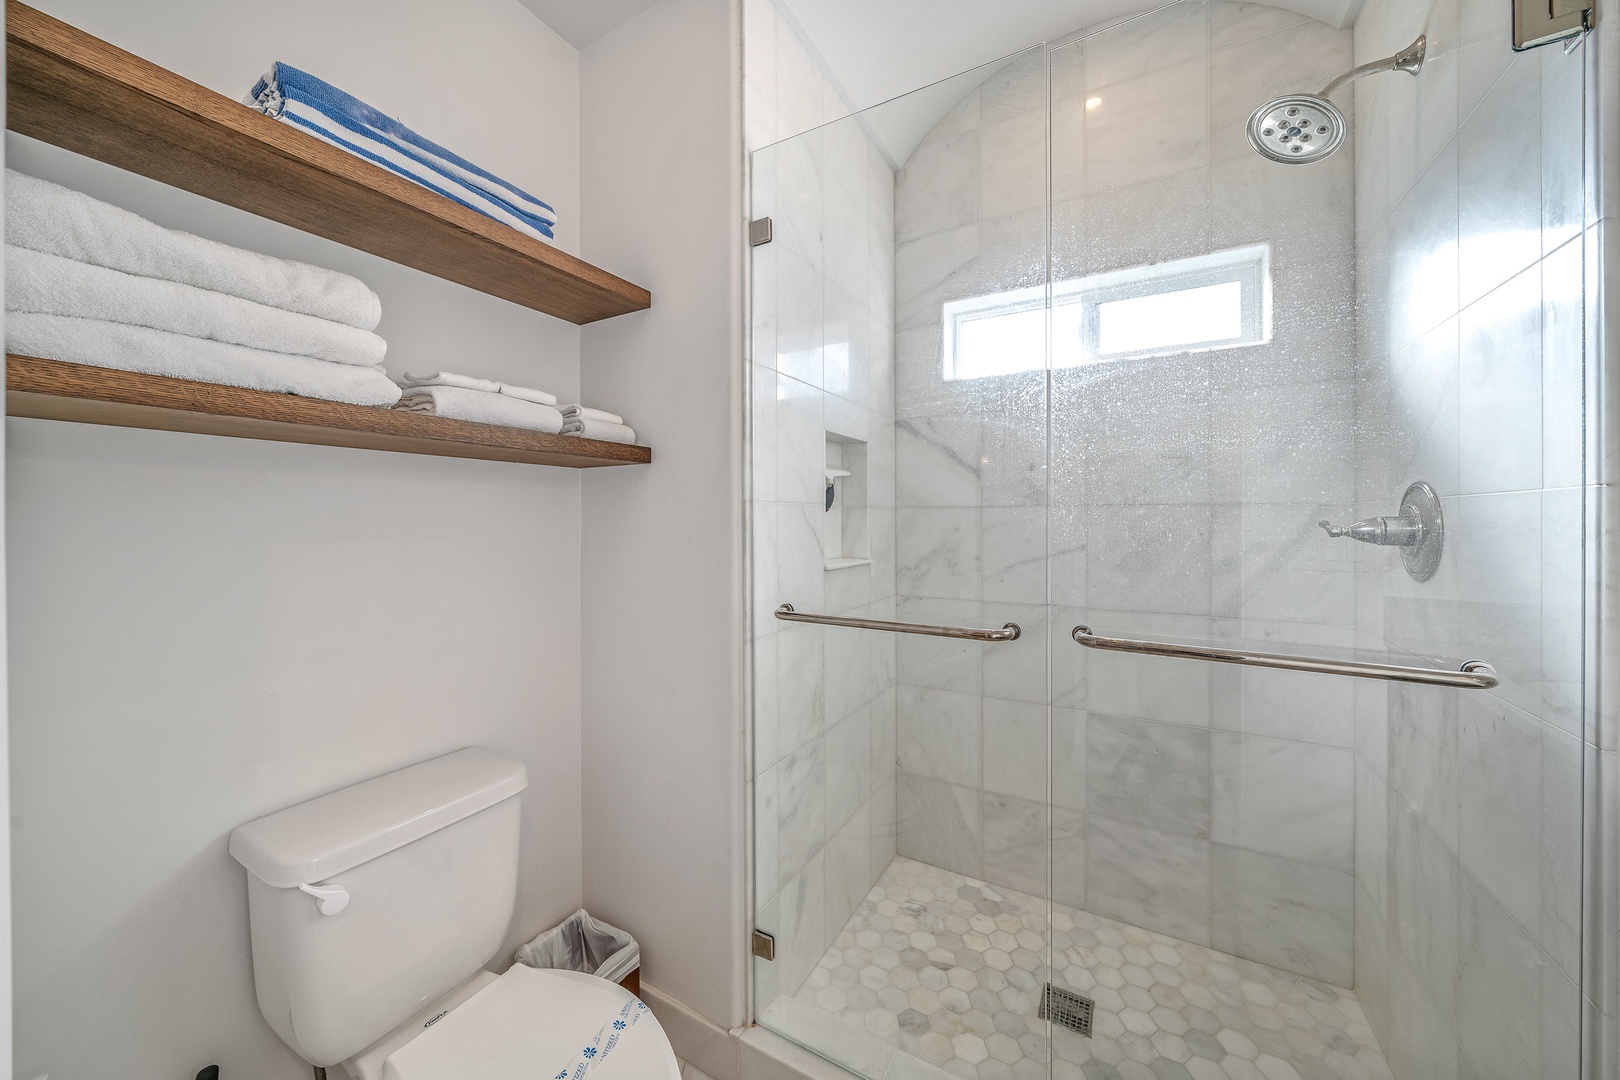 The full bathroom includes a single vanity & spa-like glass shower